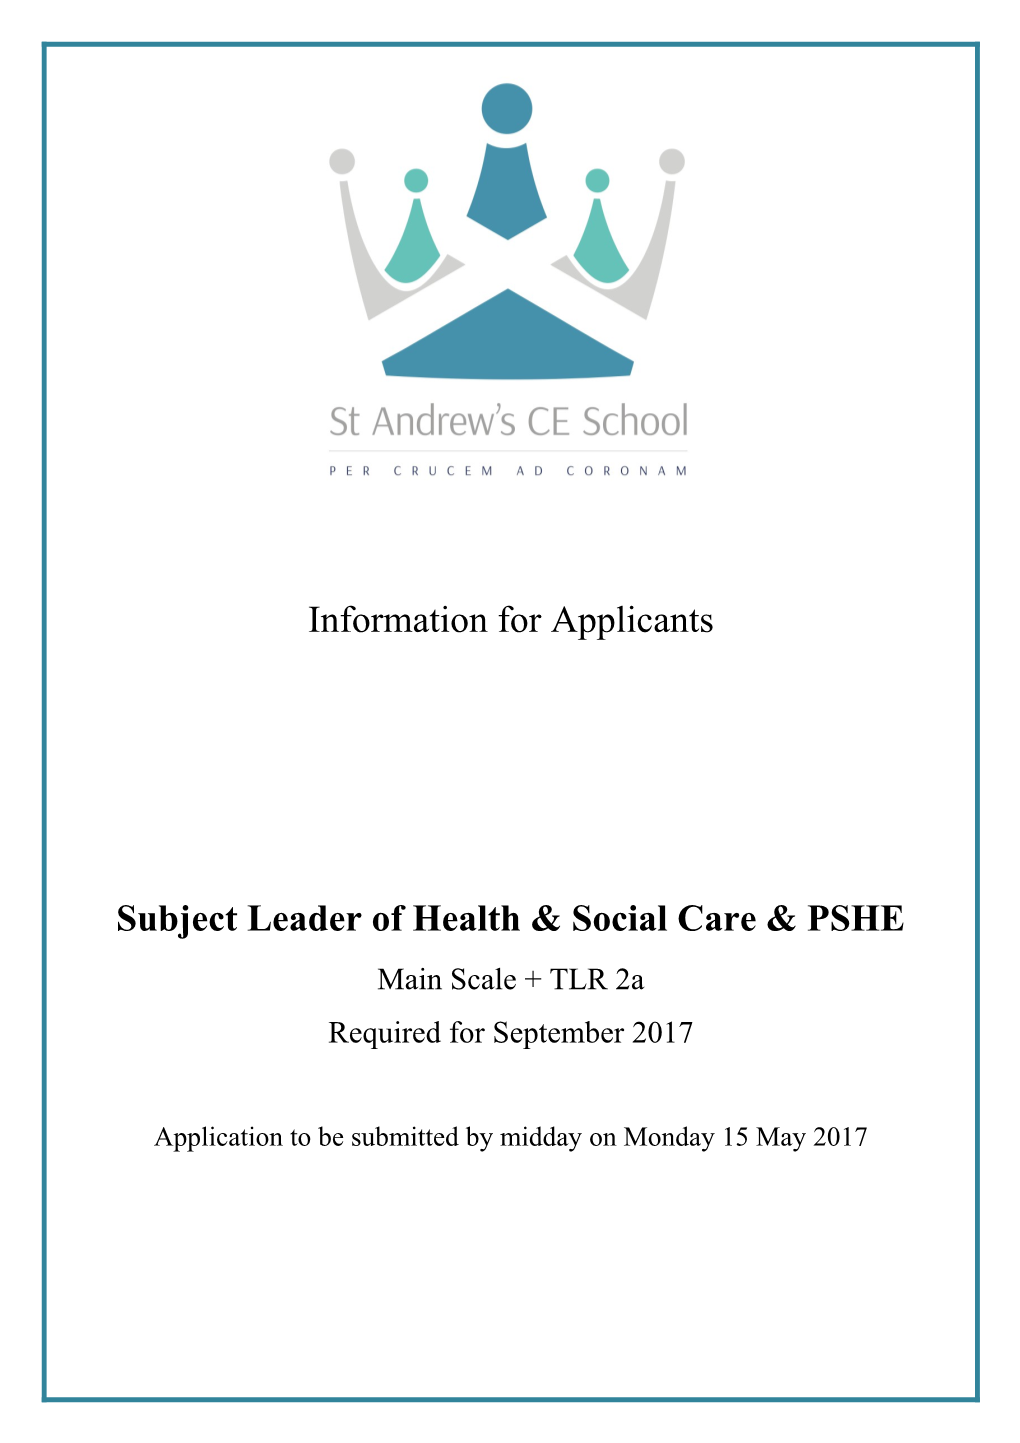 Subject Leader of Health & Social Care & PSHE